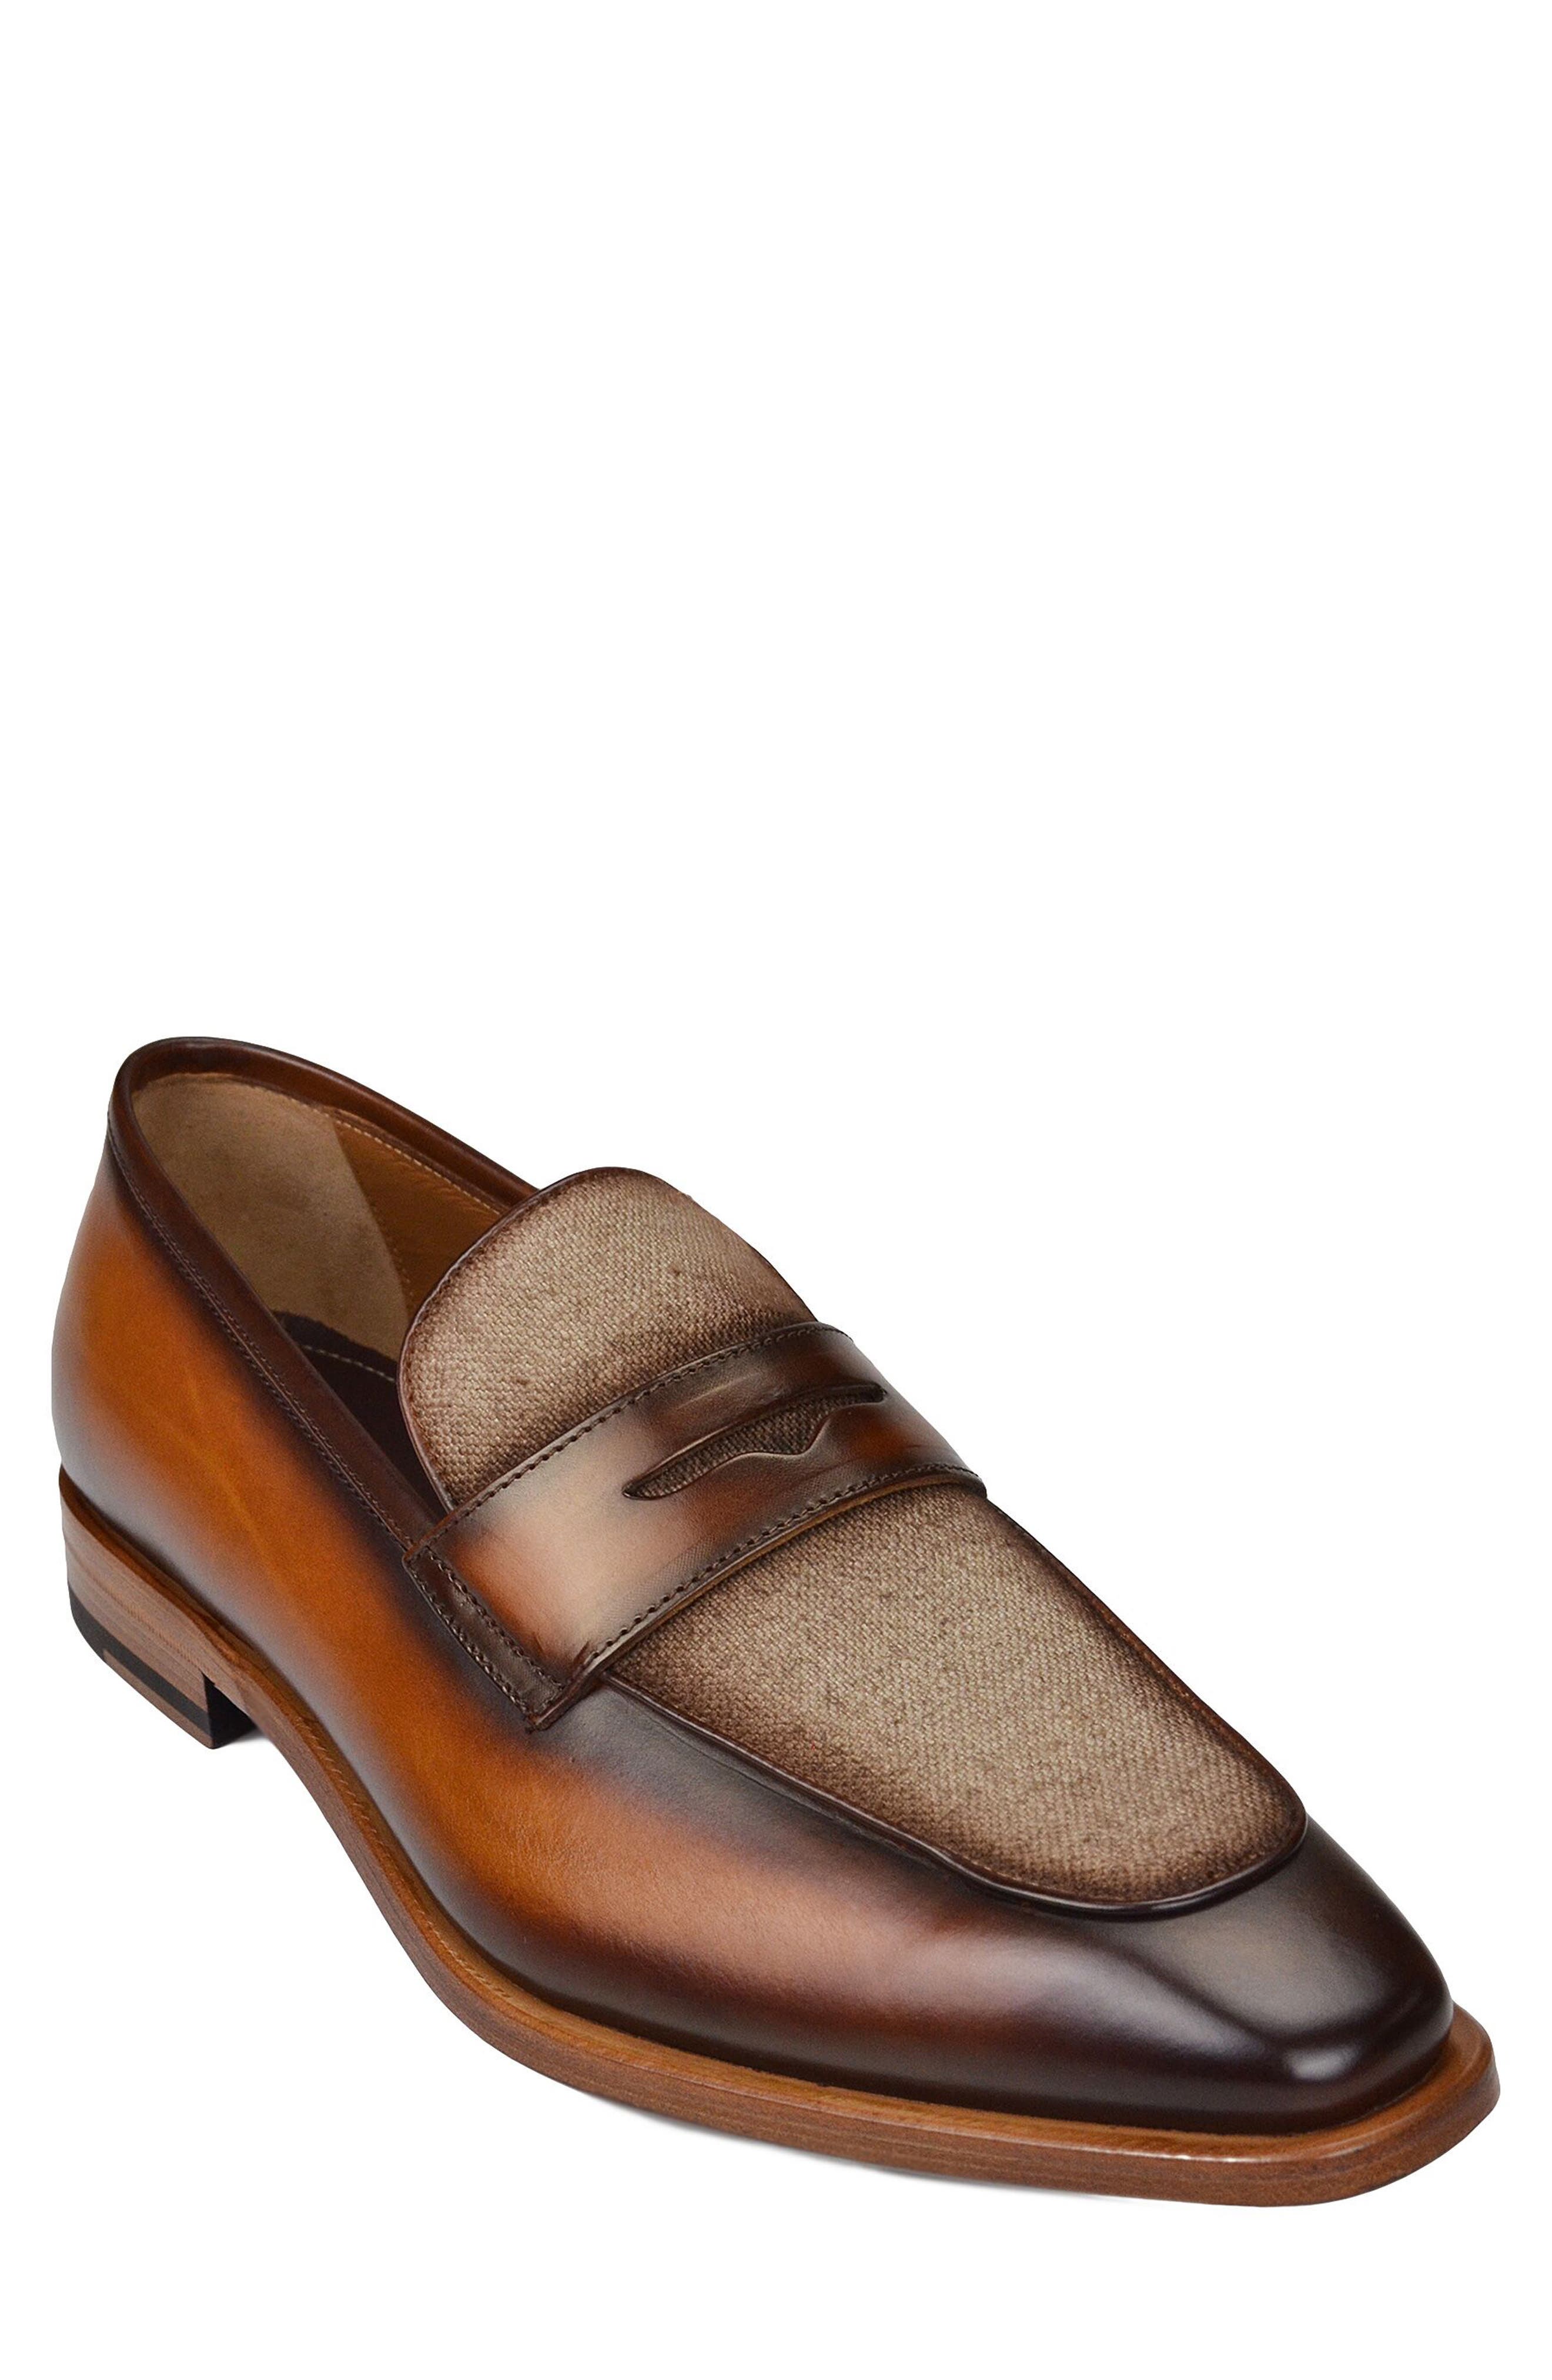 bruno magli men's shoes nordstrom